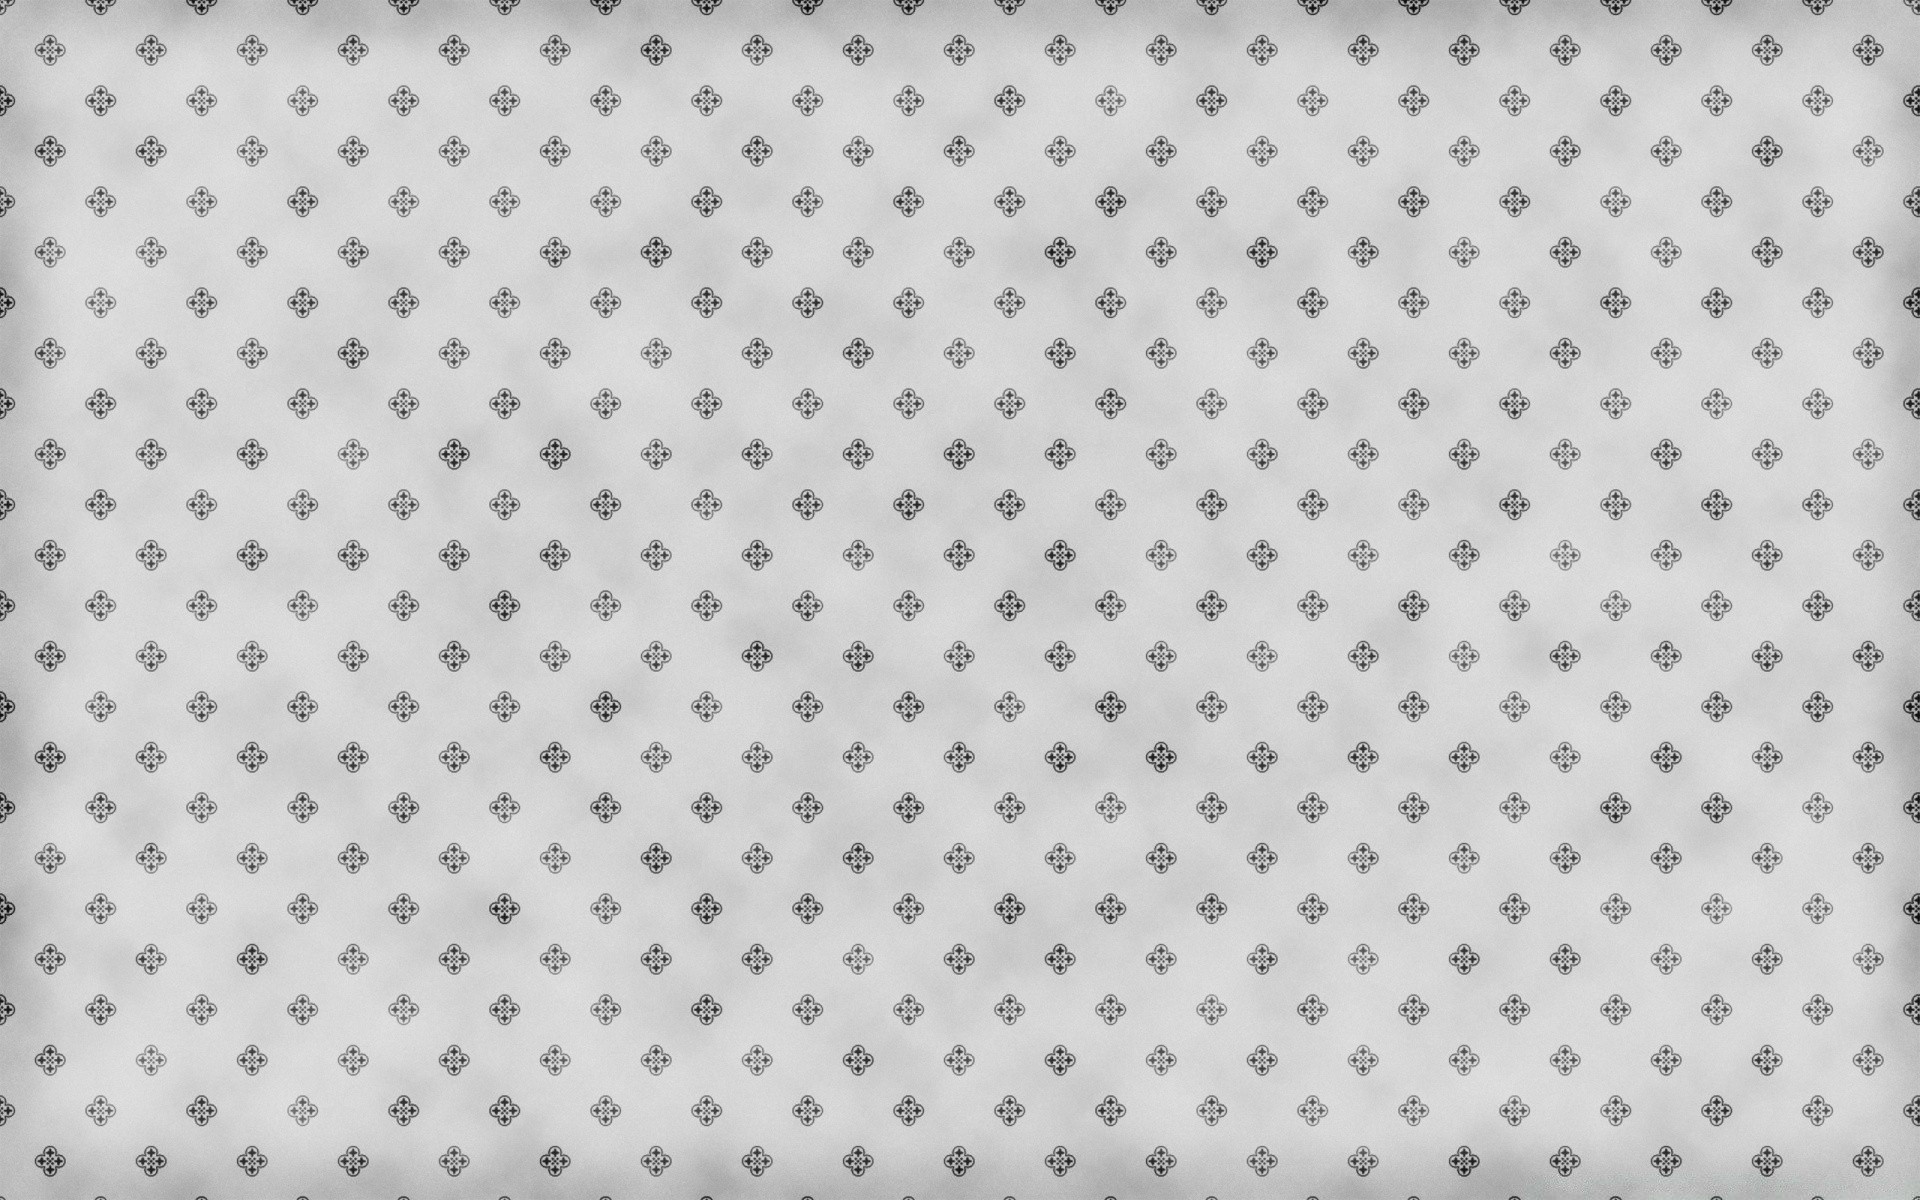 vintage polka wallpaper dot seamless pattern design fabric texture desktop retro abstract background illustration tile textile geometric graphic punt repetition decoration